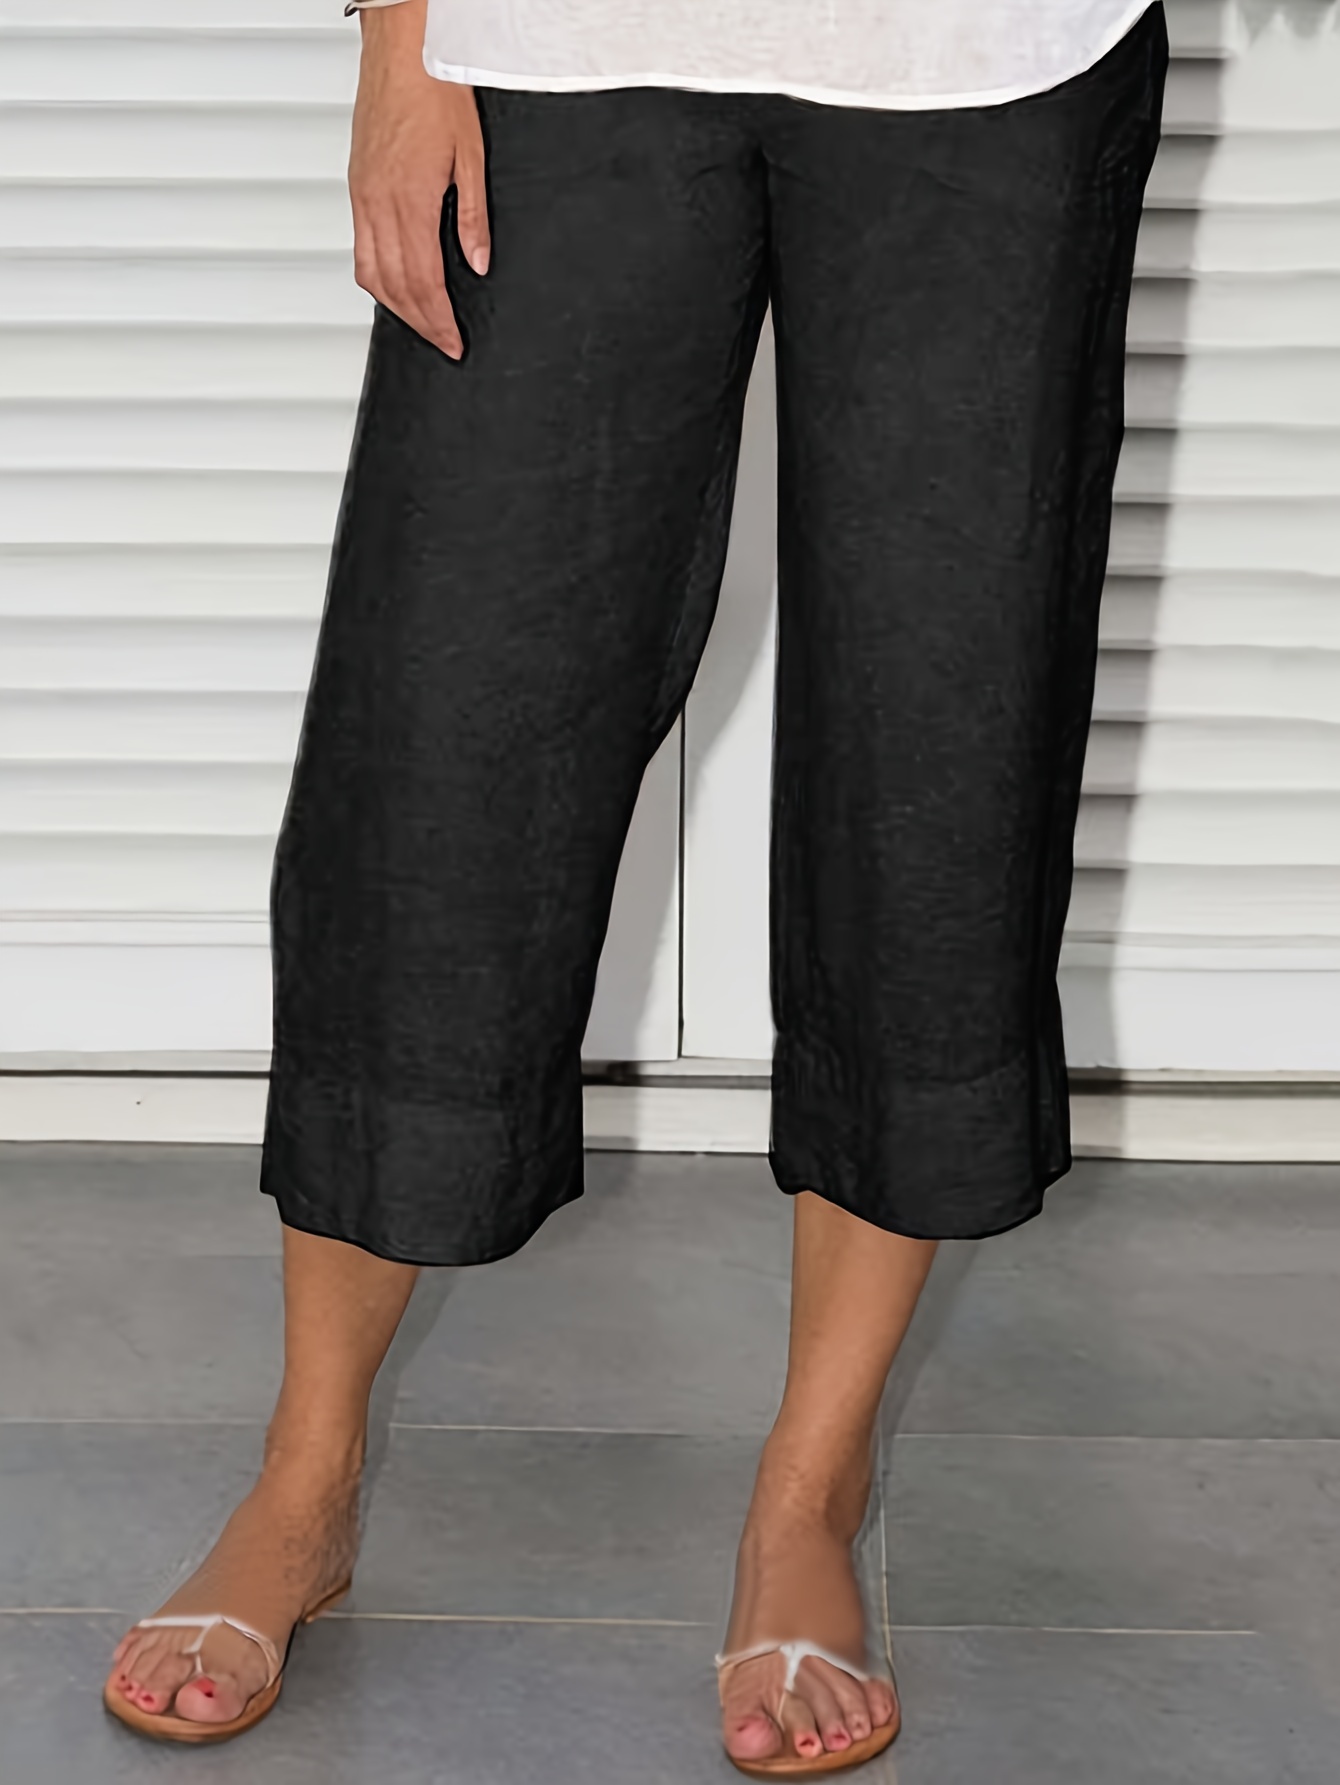 Plus Size Capris For Women - Cotton Capri Pants - Black - Tanya